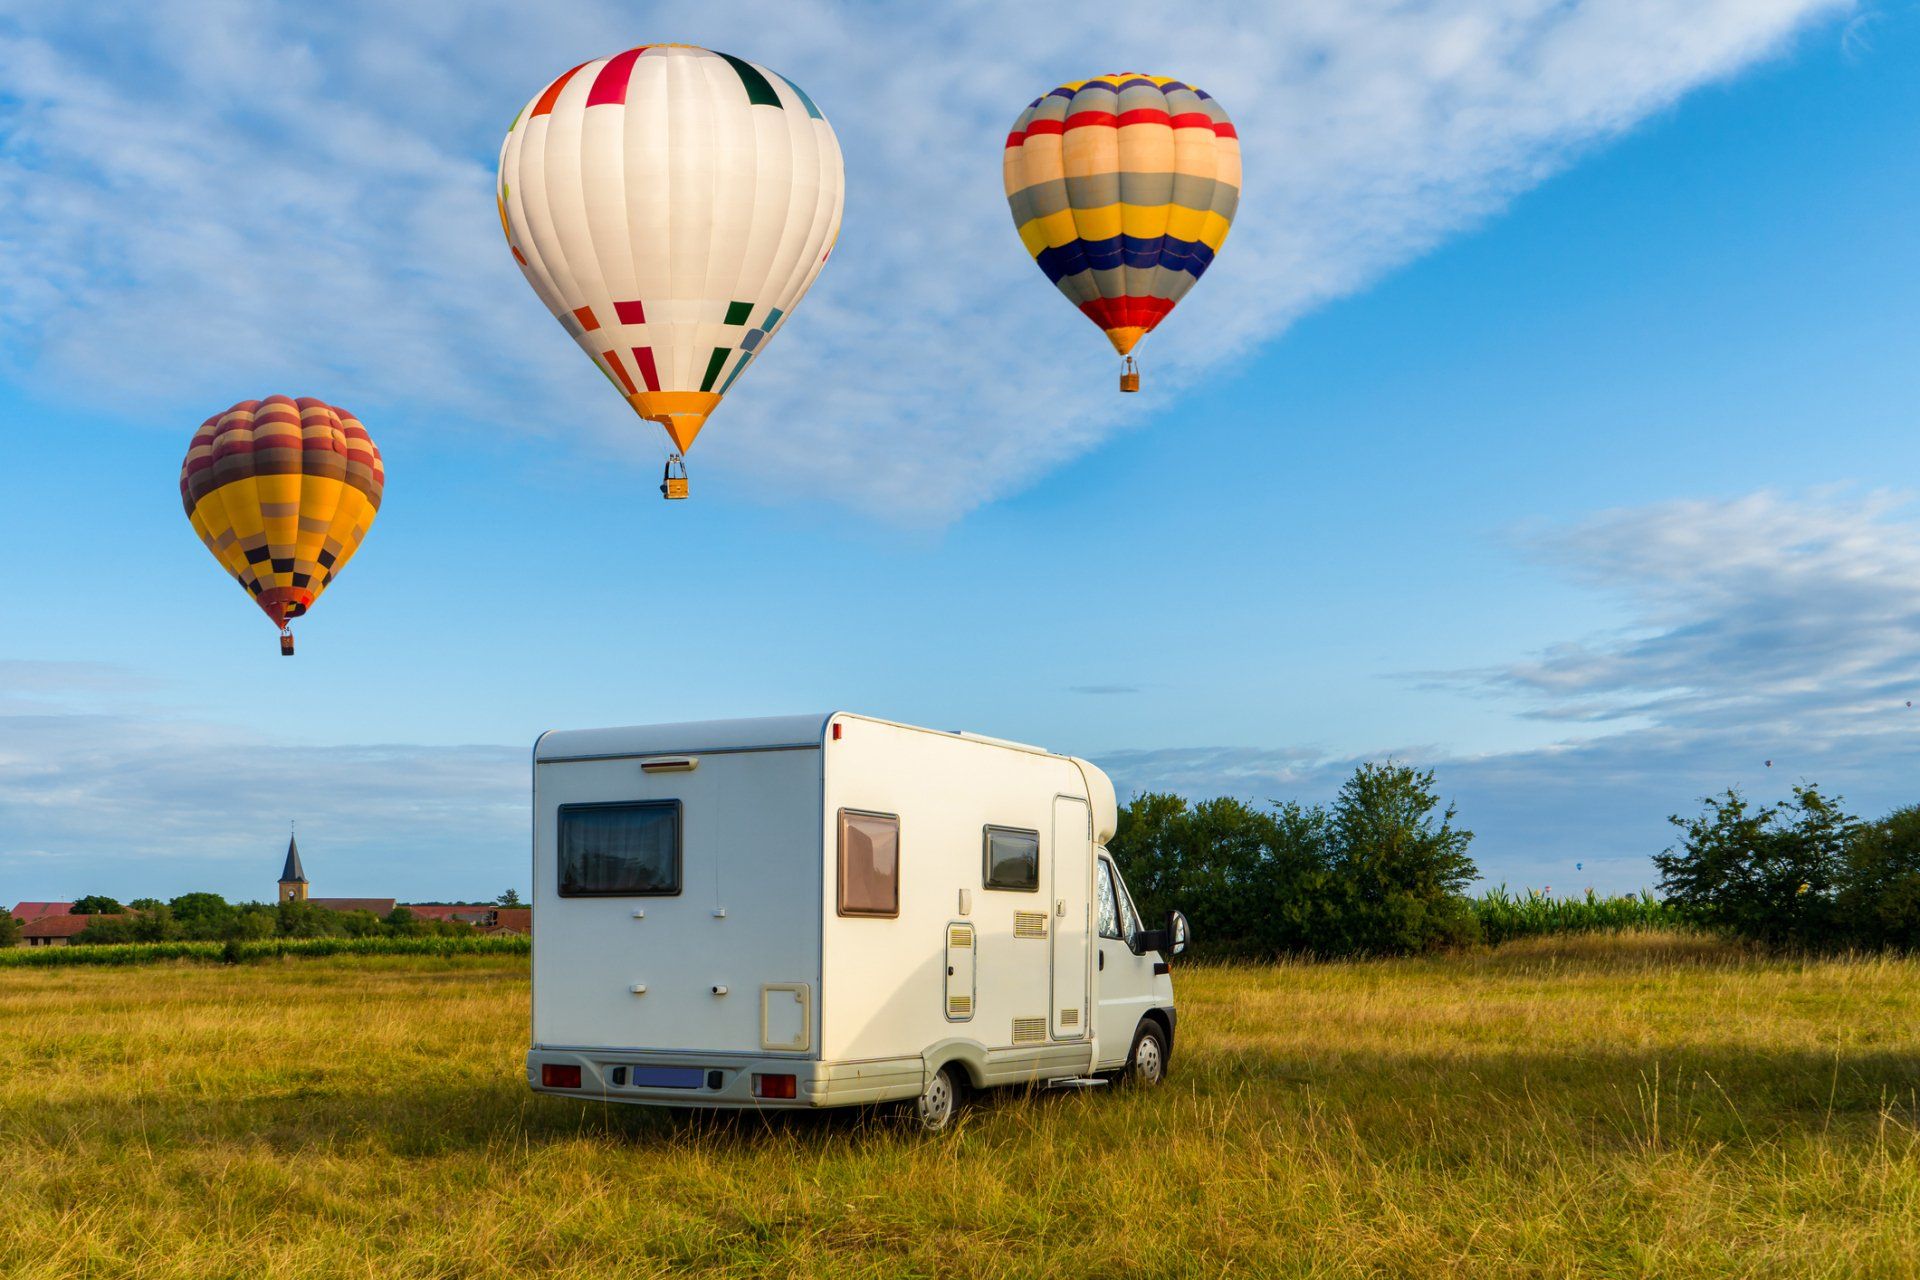 International Hot Air Balloons Festival - Milton, NH  - RV Service and R & L Van Builds